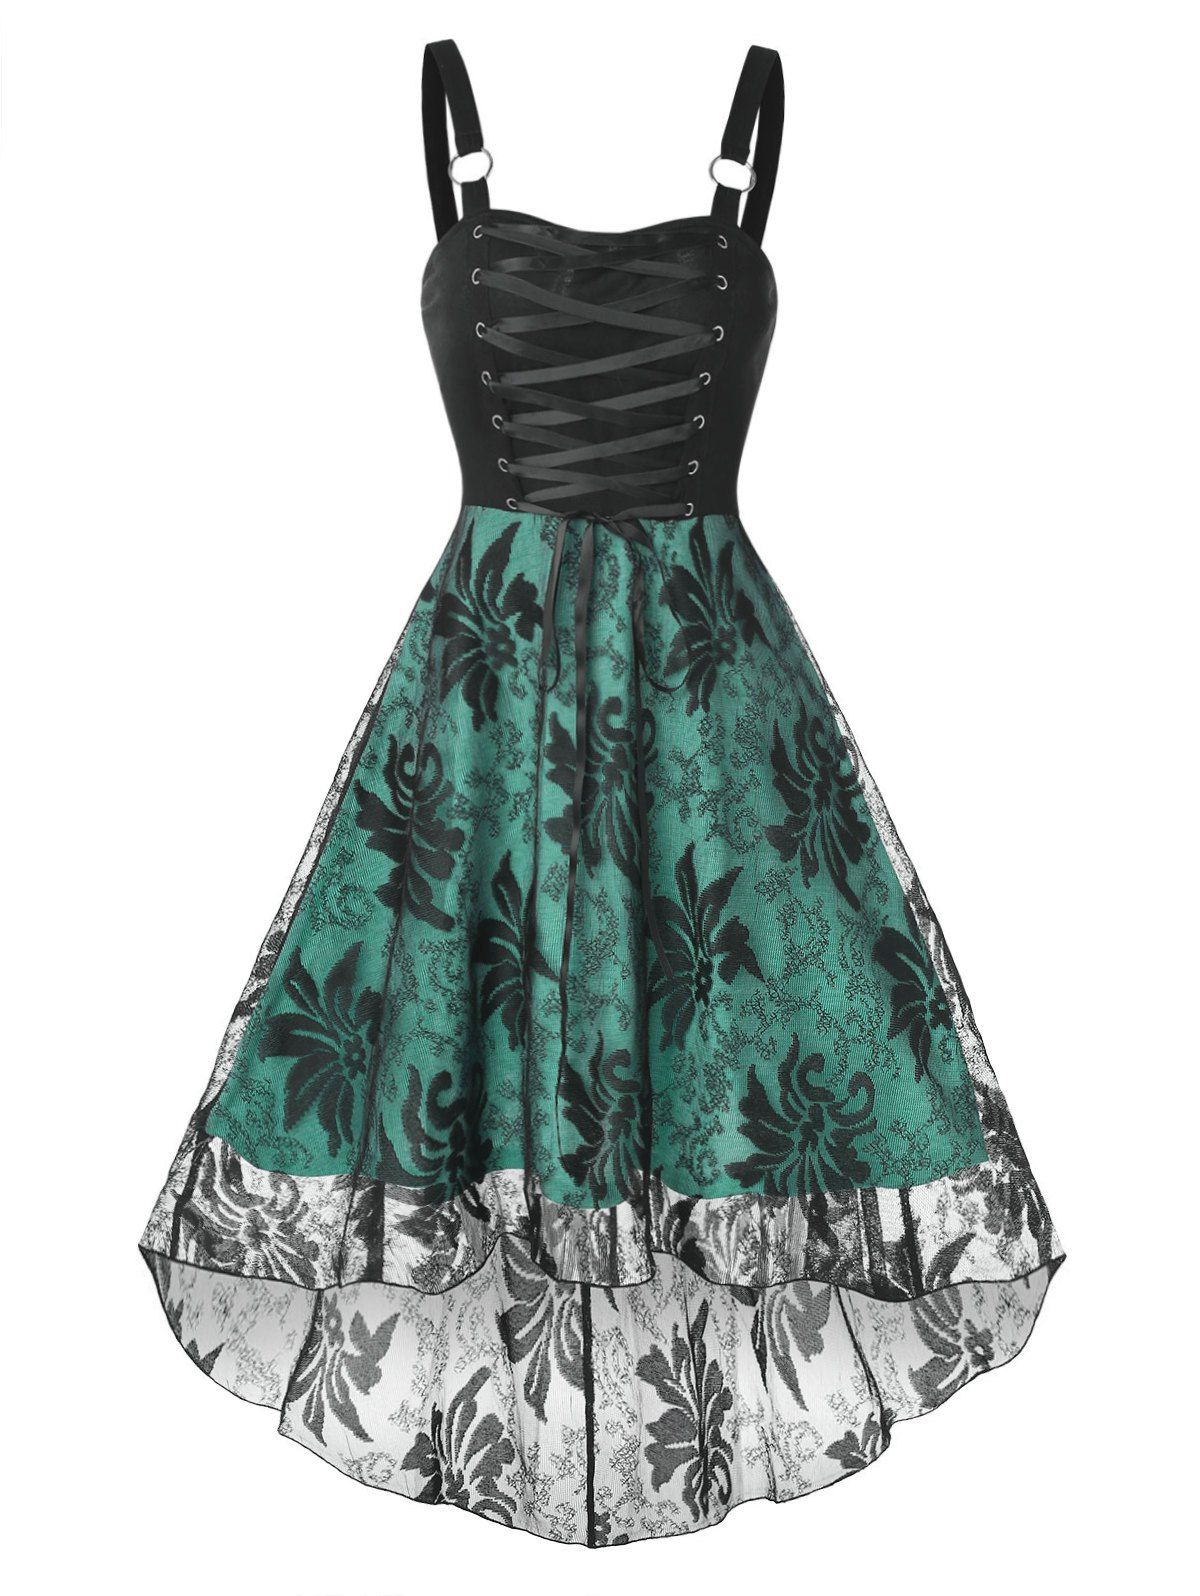 Vintage Contrast Lace Insert Lace Up High Low Midi Cami Dress - BLACK XXL